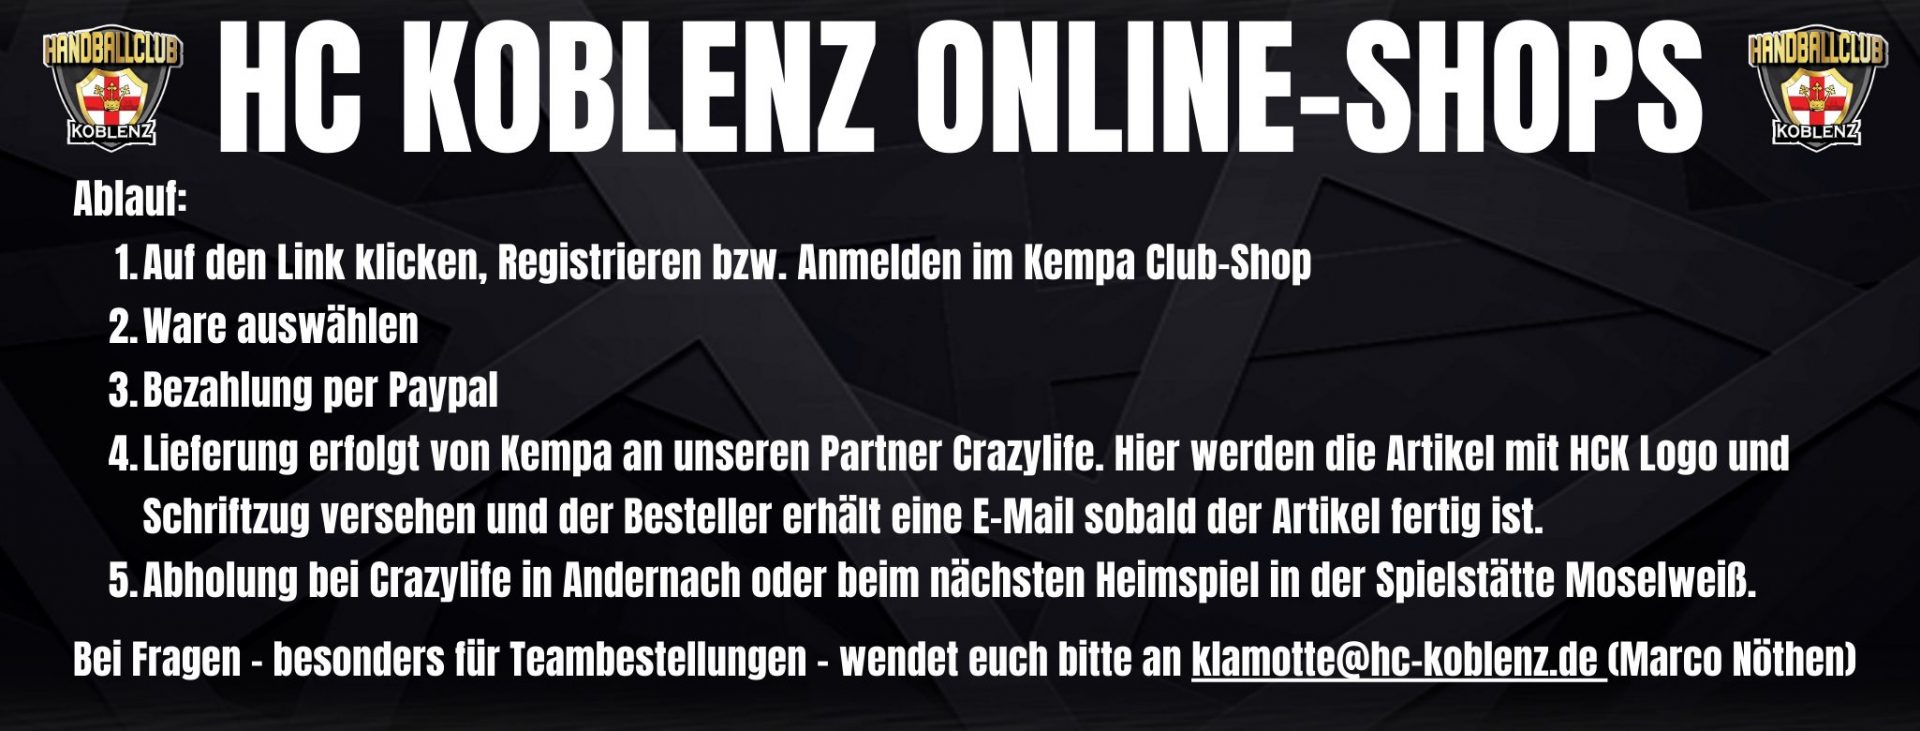 HC Koblenz_Onlineshop Banner (3)